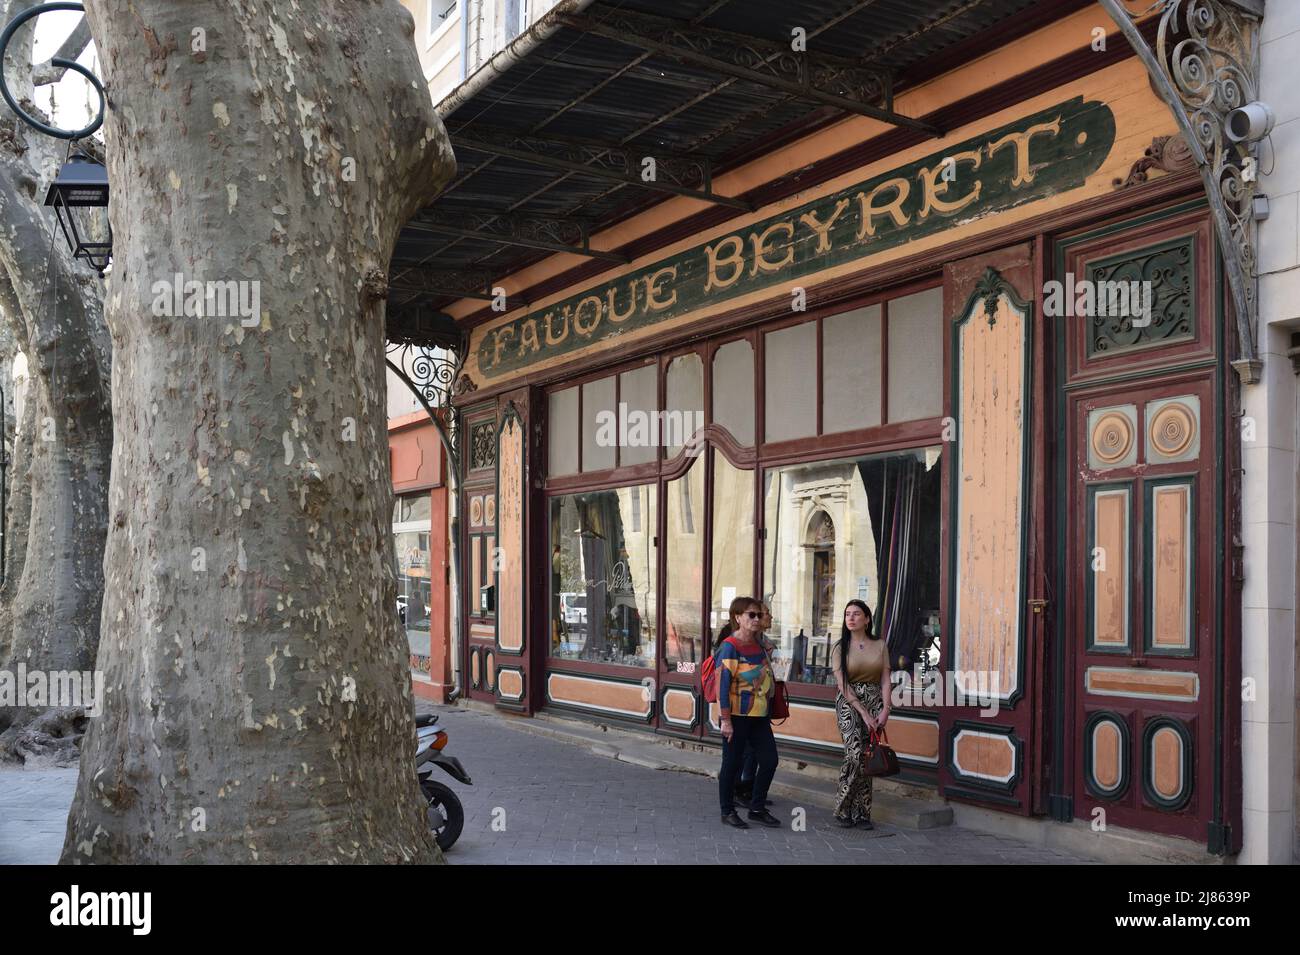 Touristen & Belle Epoque, Art Nouveau oder Vintage Ladenfront, Fauque Beyret, Altstadt oder Historisches Viertel Isle-sur-la-Sorgue Vaucluse Provence Frankreich Stockfoto